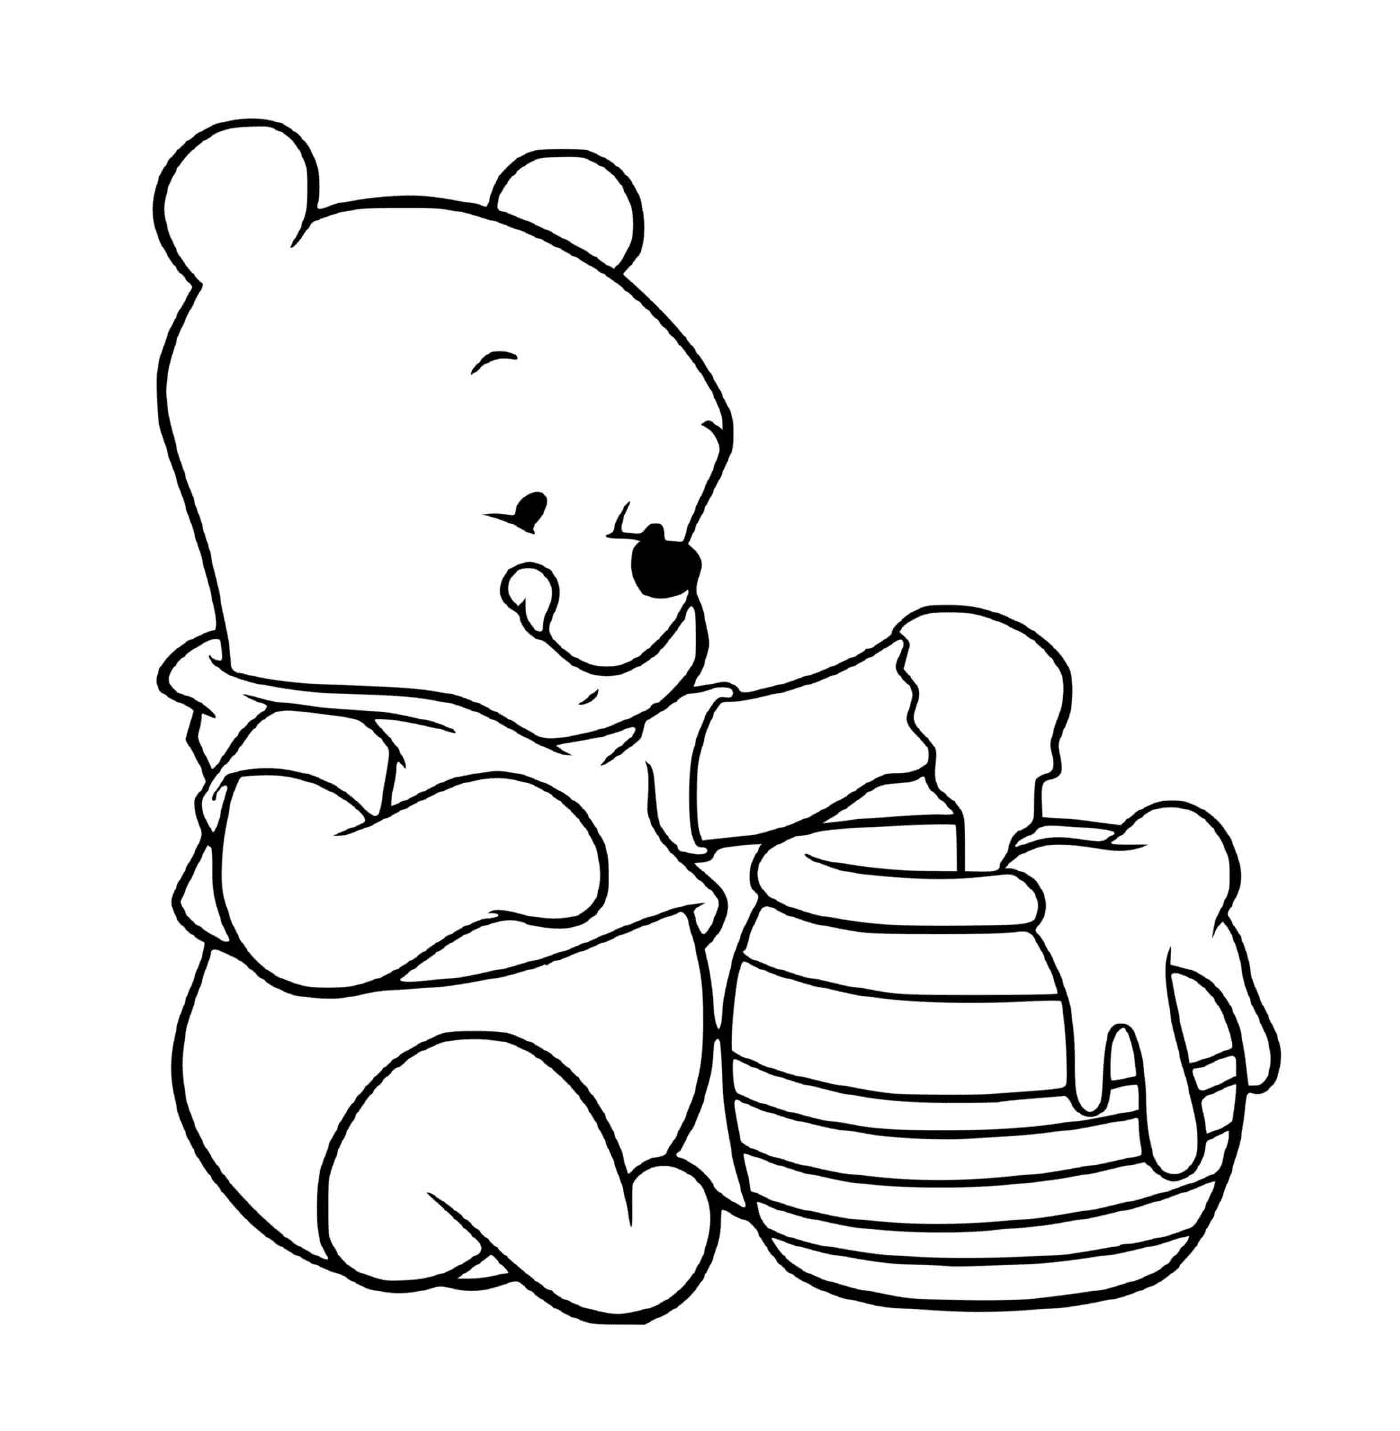  O urso ama o mel 